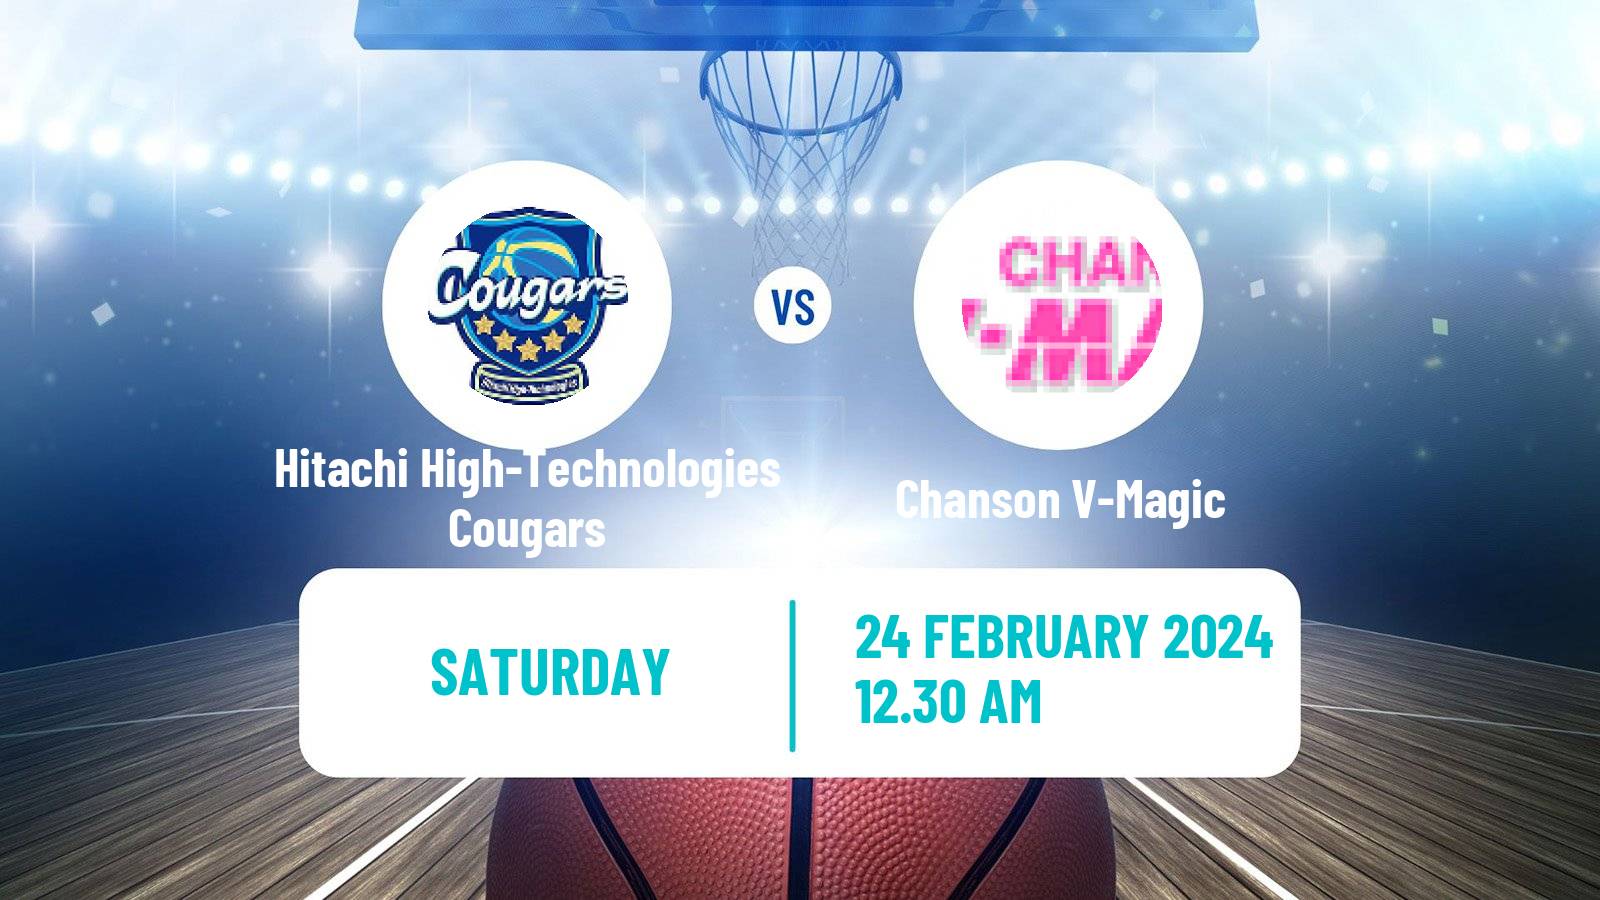 Basketball Japan W League Basketball Hitachi High-Technologies Cougars - Chanson V-Magic